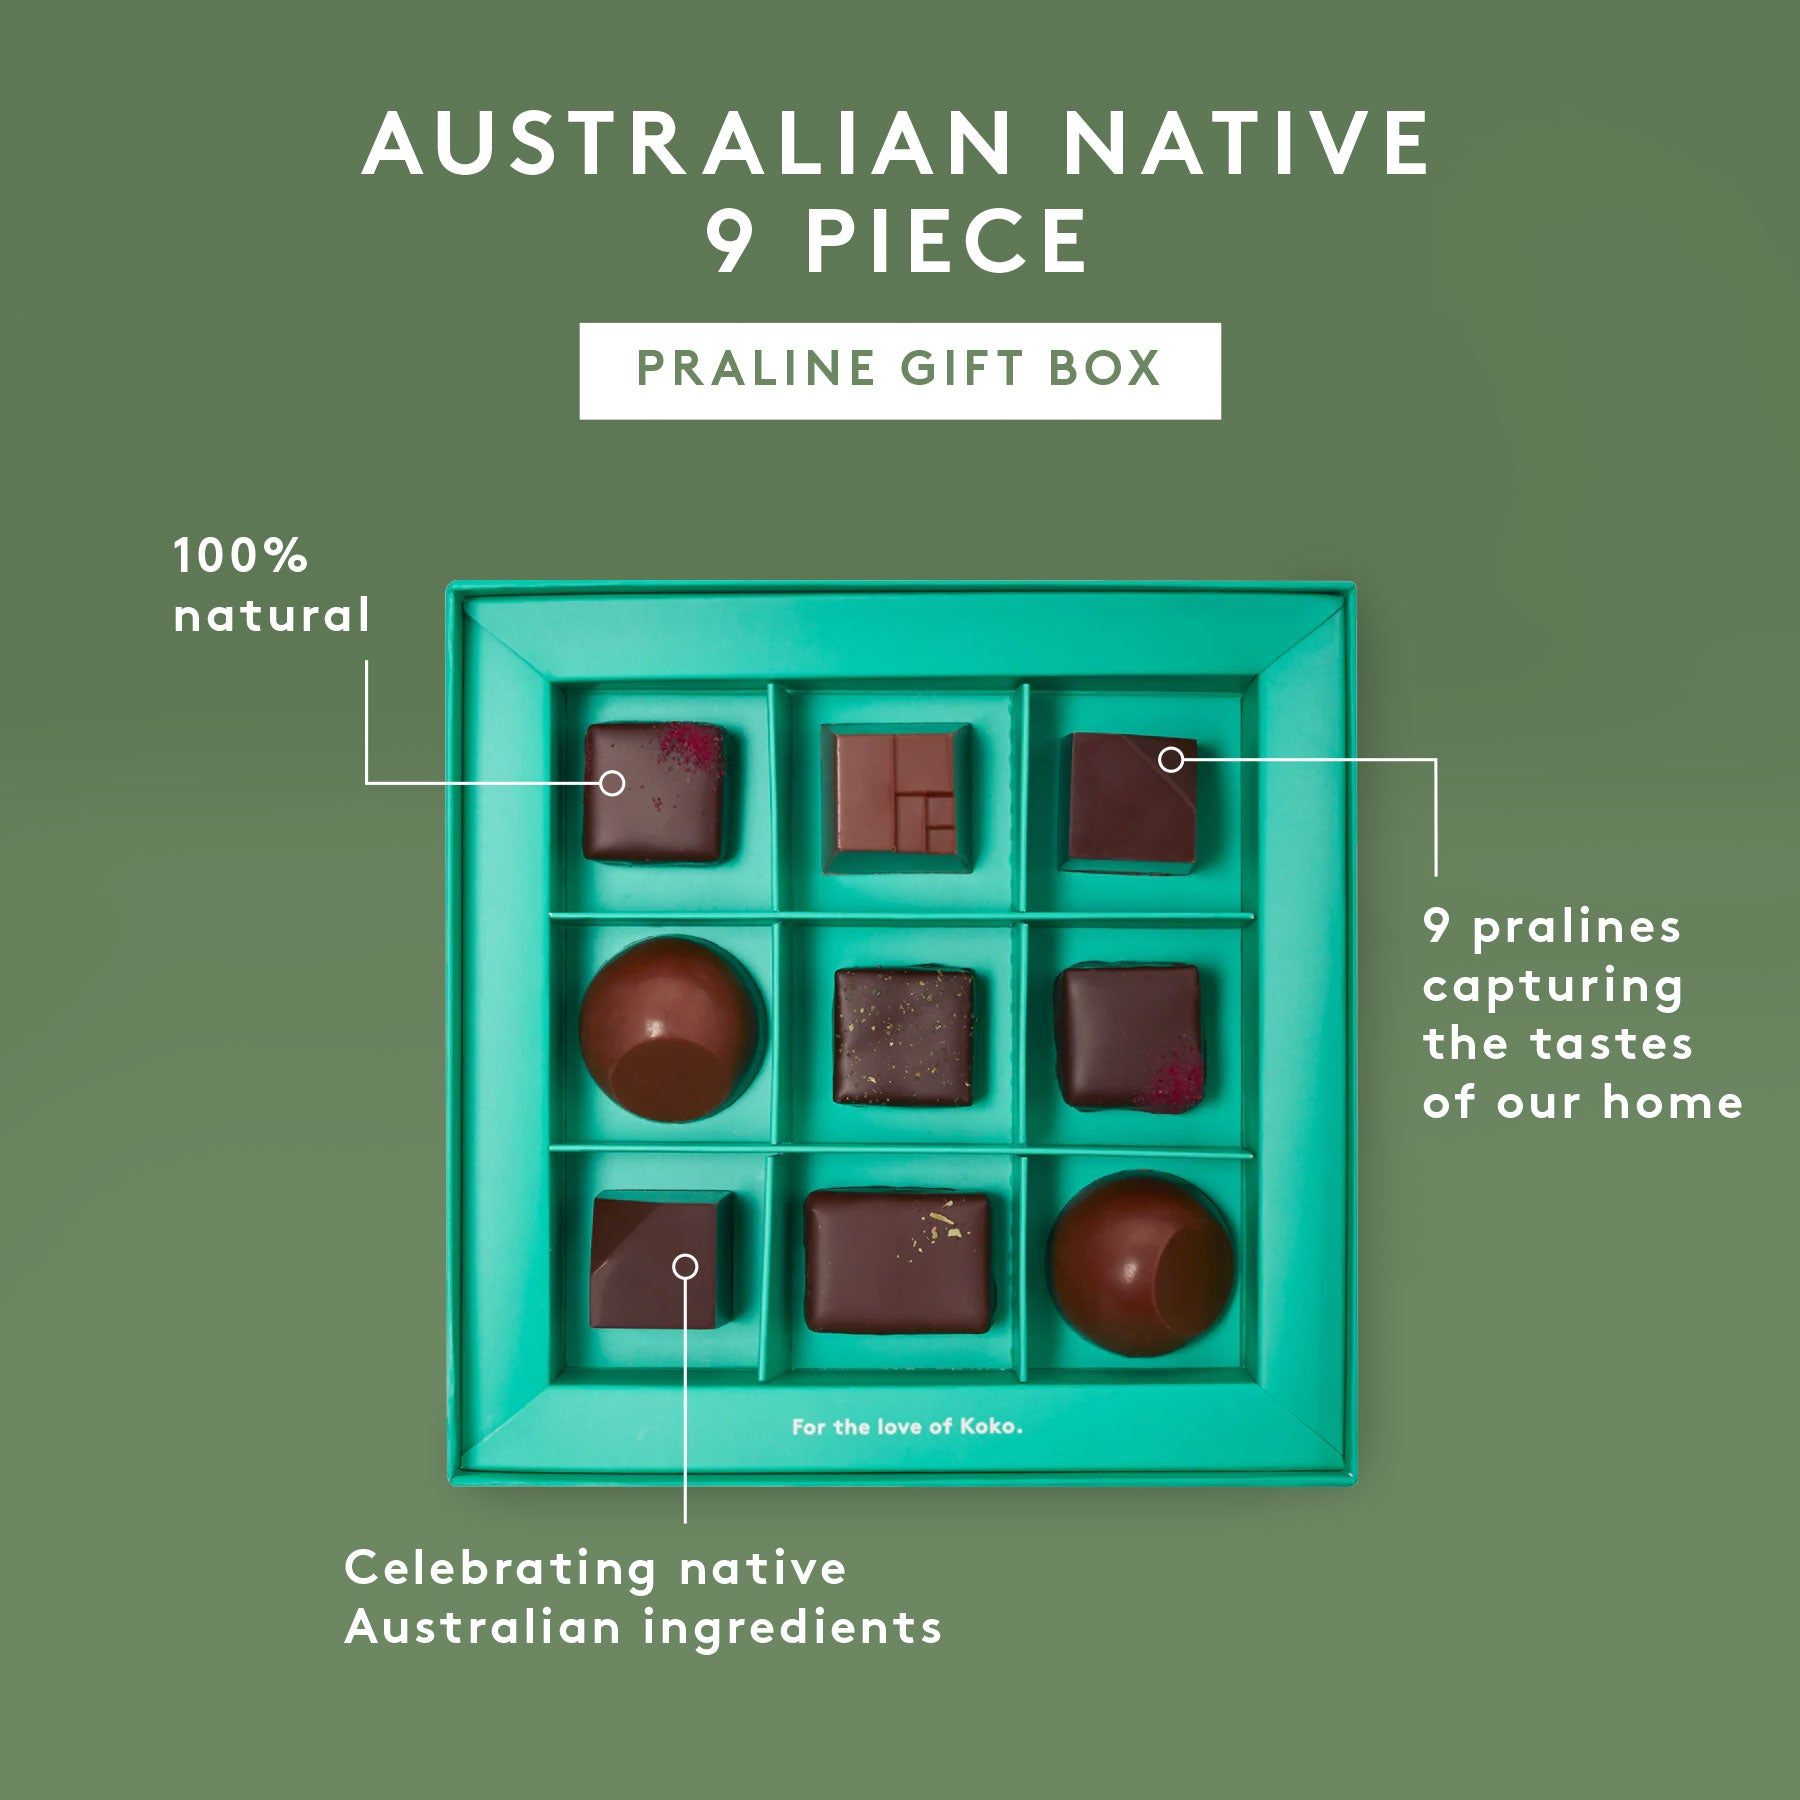 Australian Native Praline Gift Box | 9 Piece